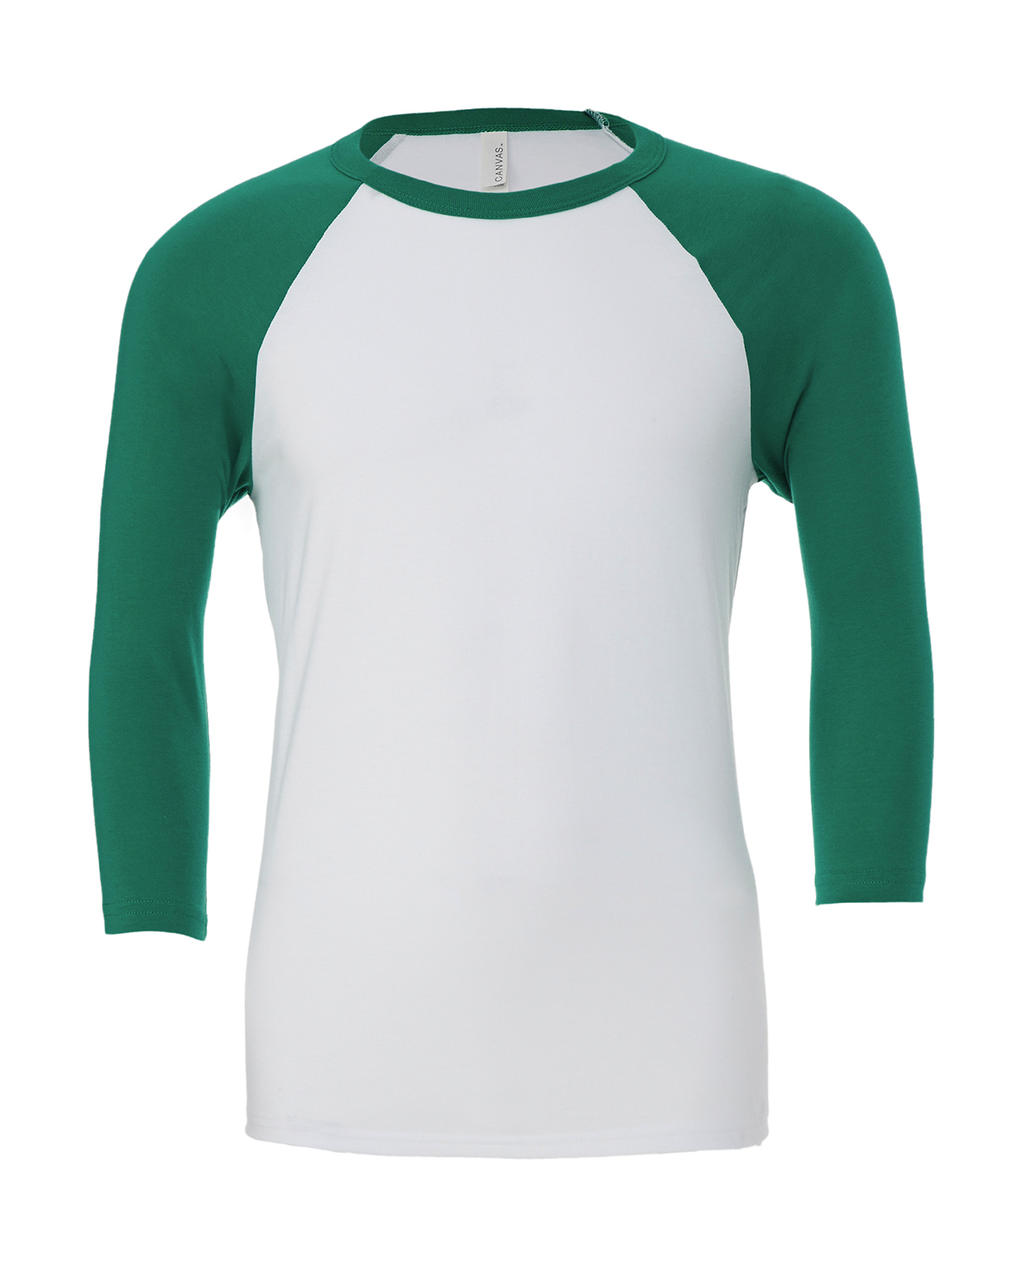  Unisex 3/4 Sleeve Baseball T-Shirt in Farbe White/Kelly Green